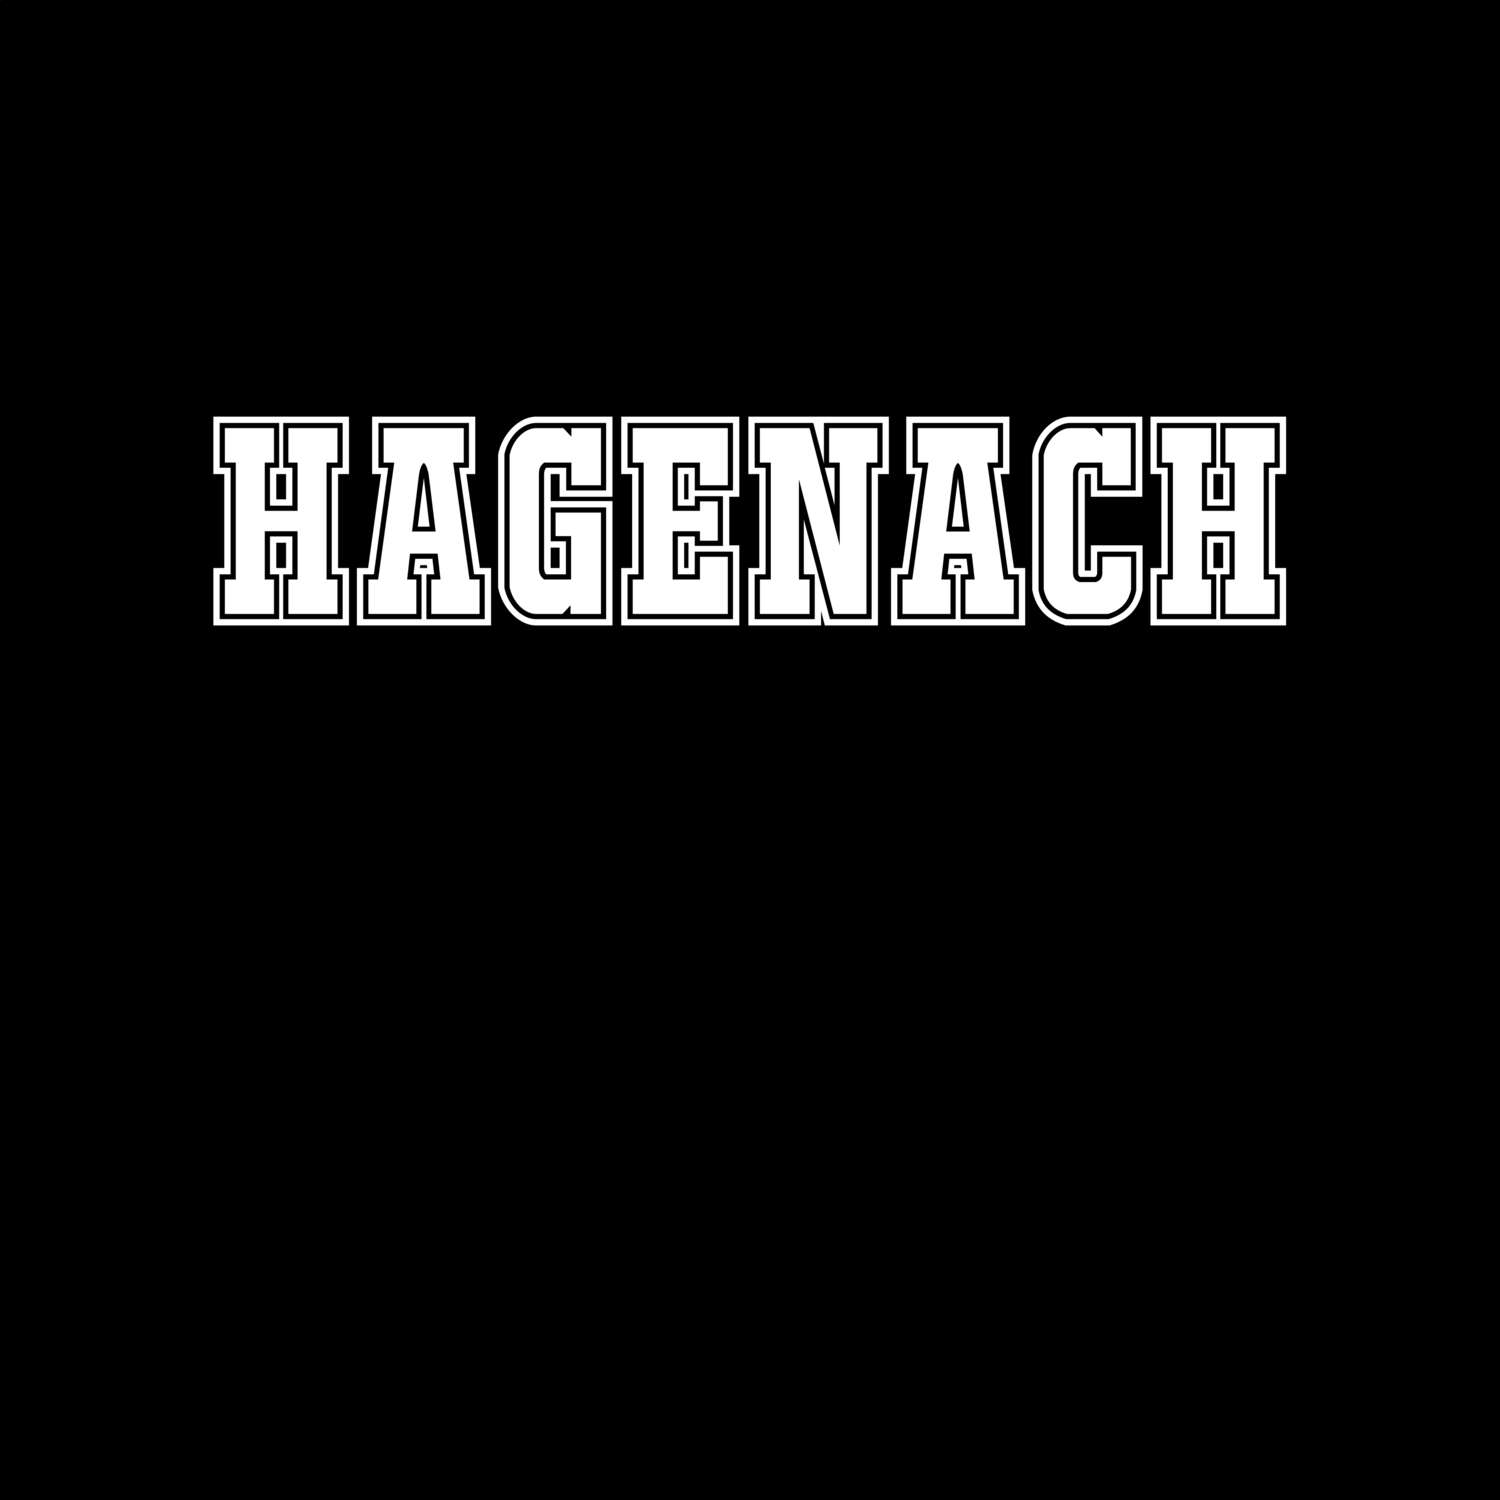 Hagenach T-Shirt »Classic«